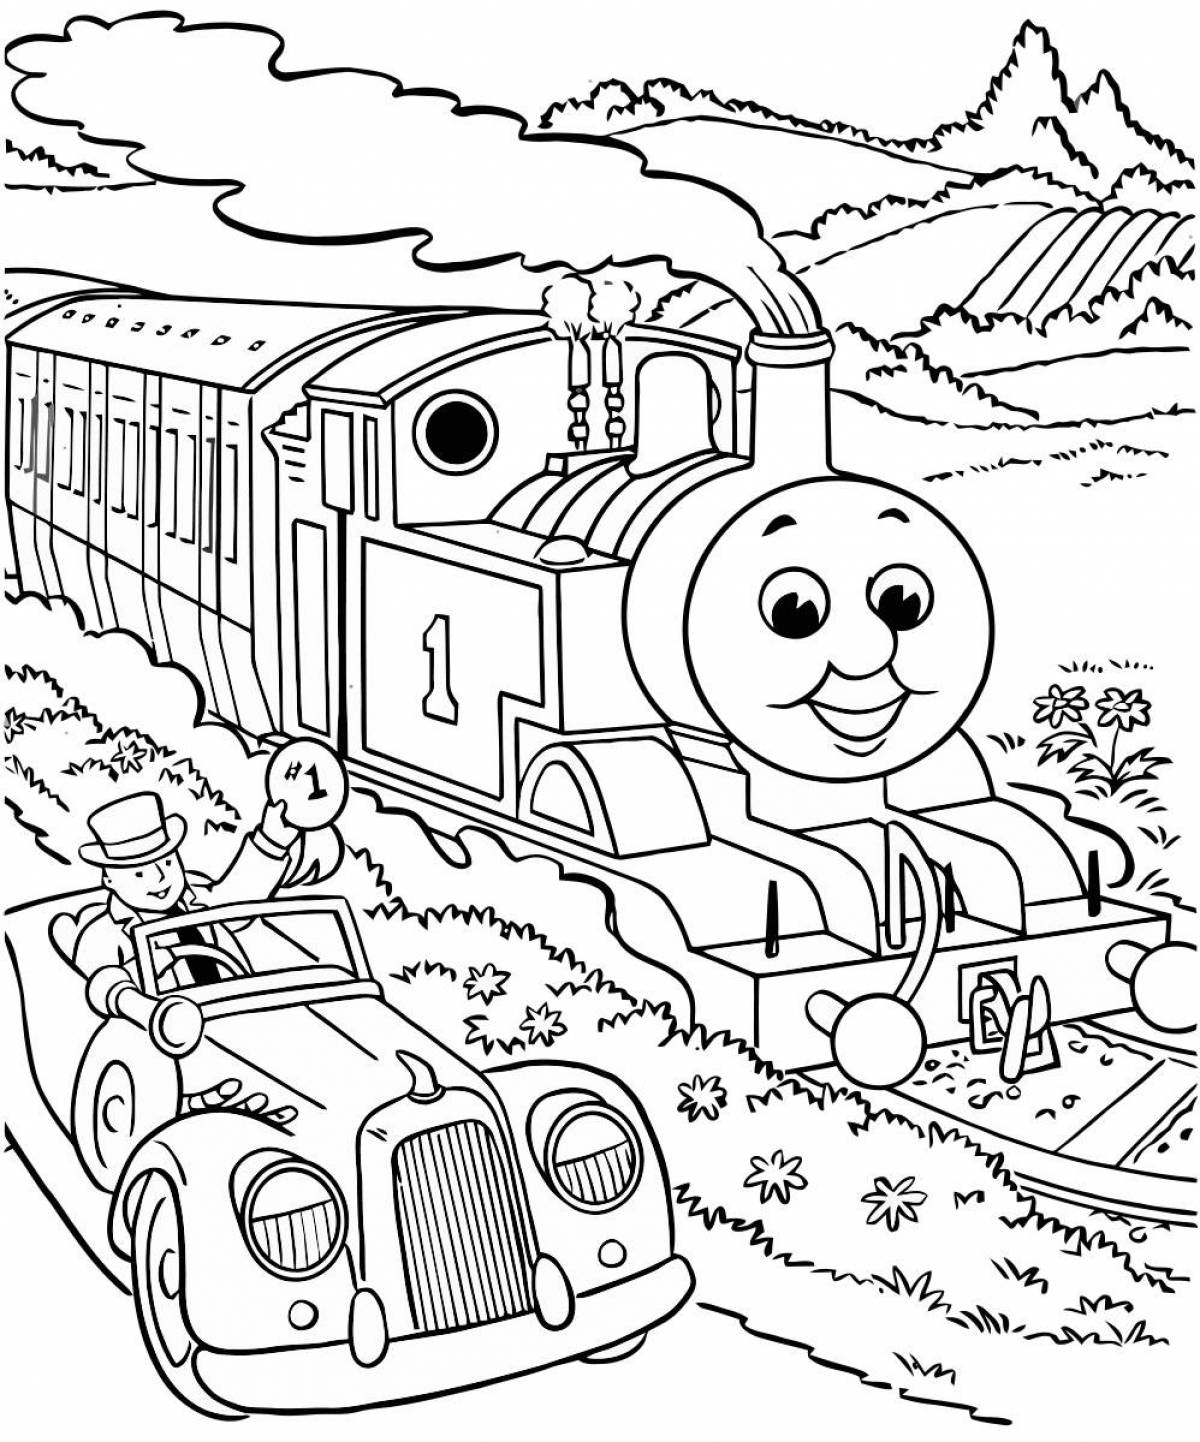 Thomas the train for kids